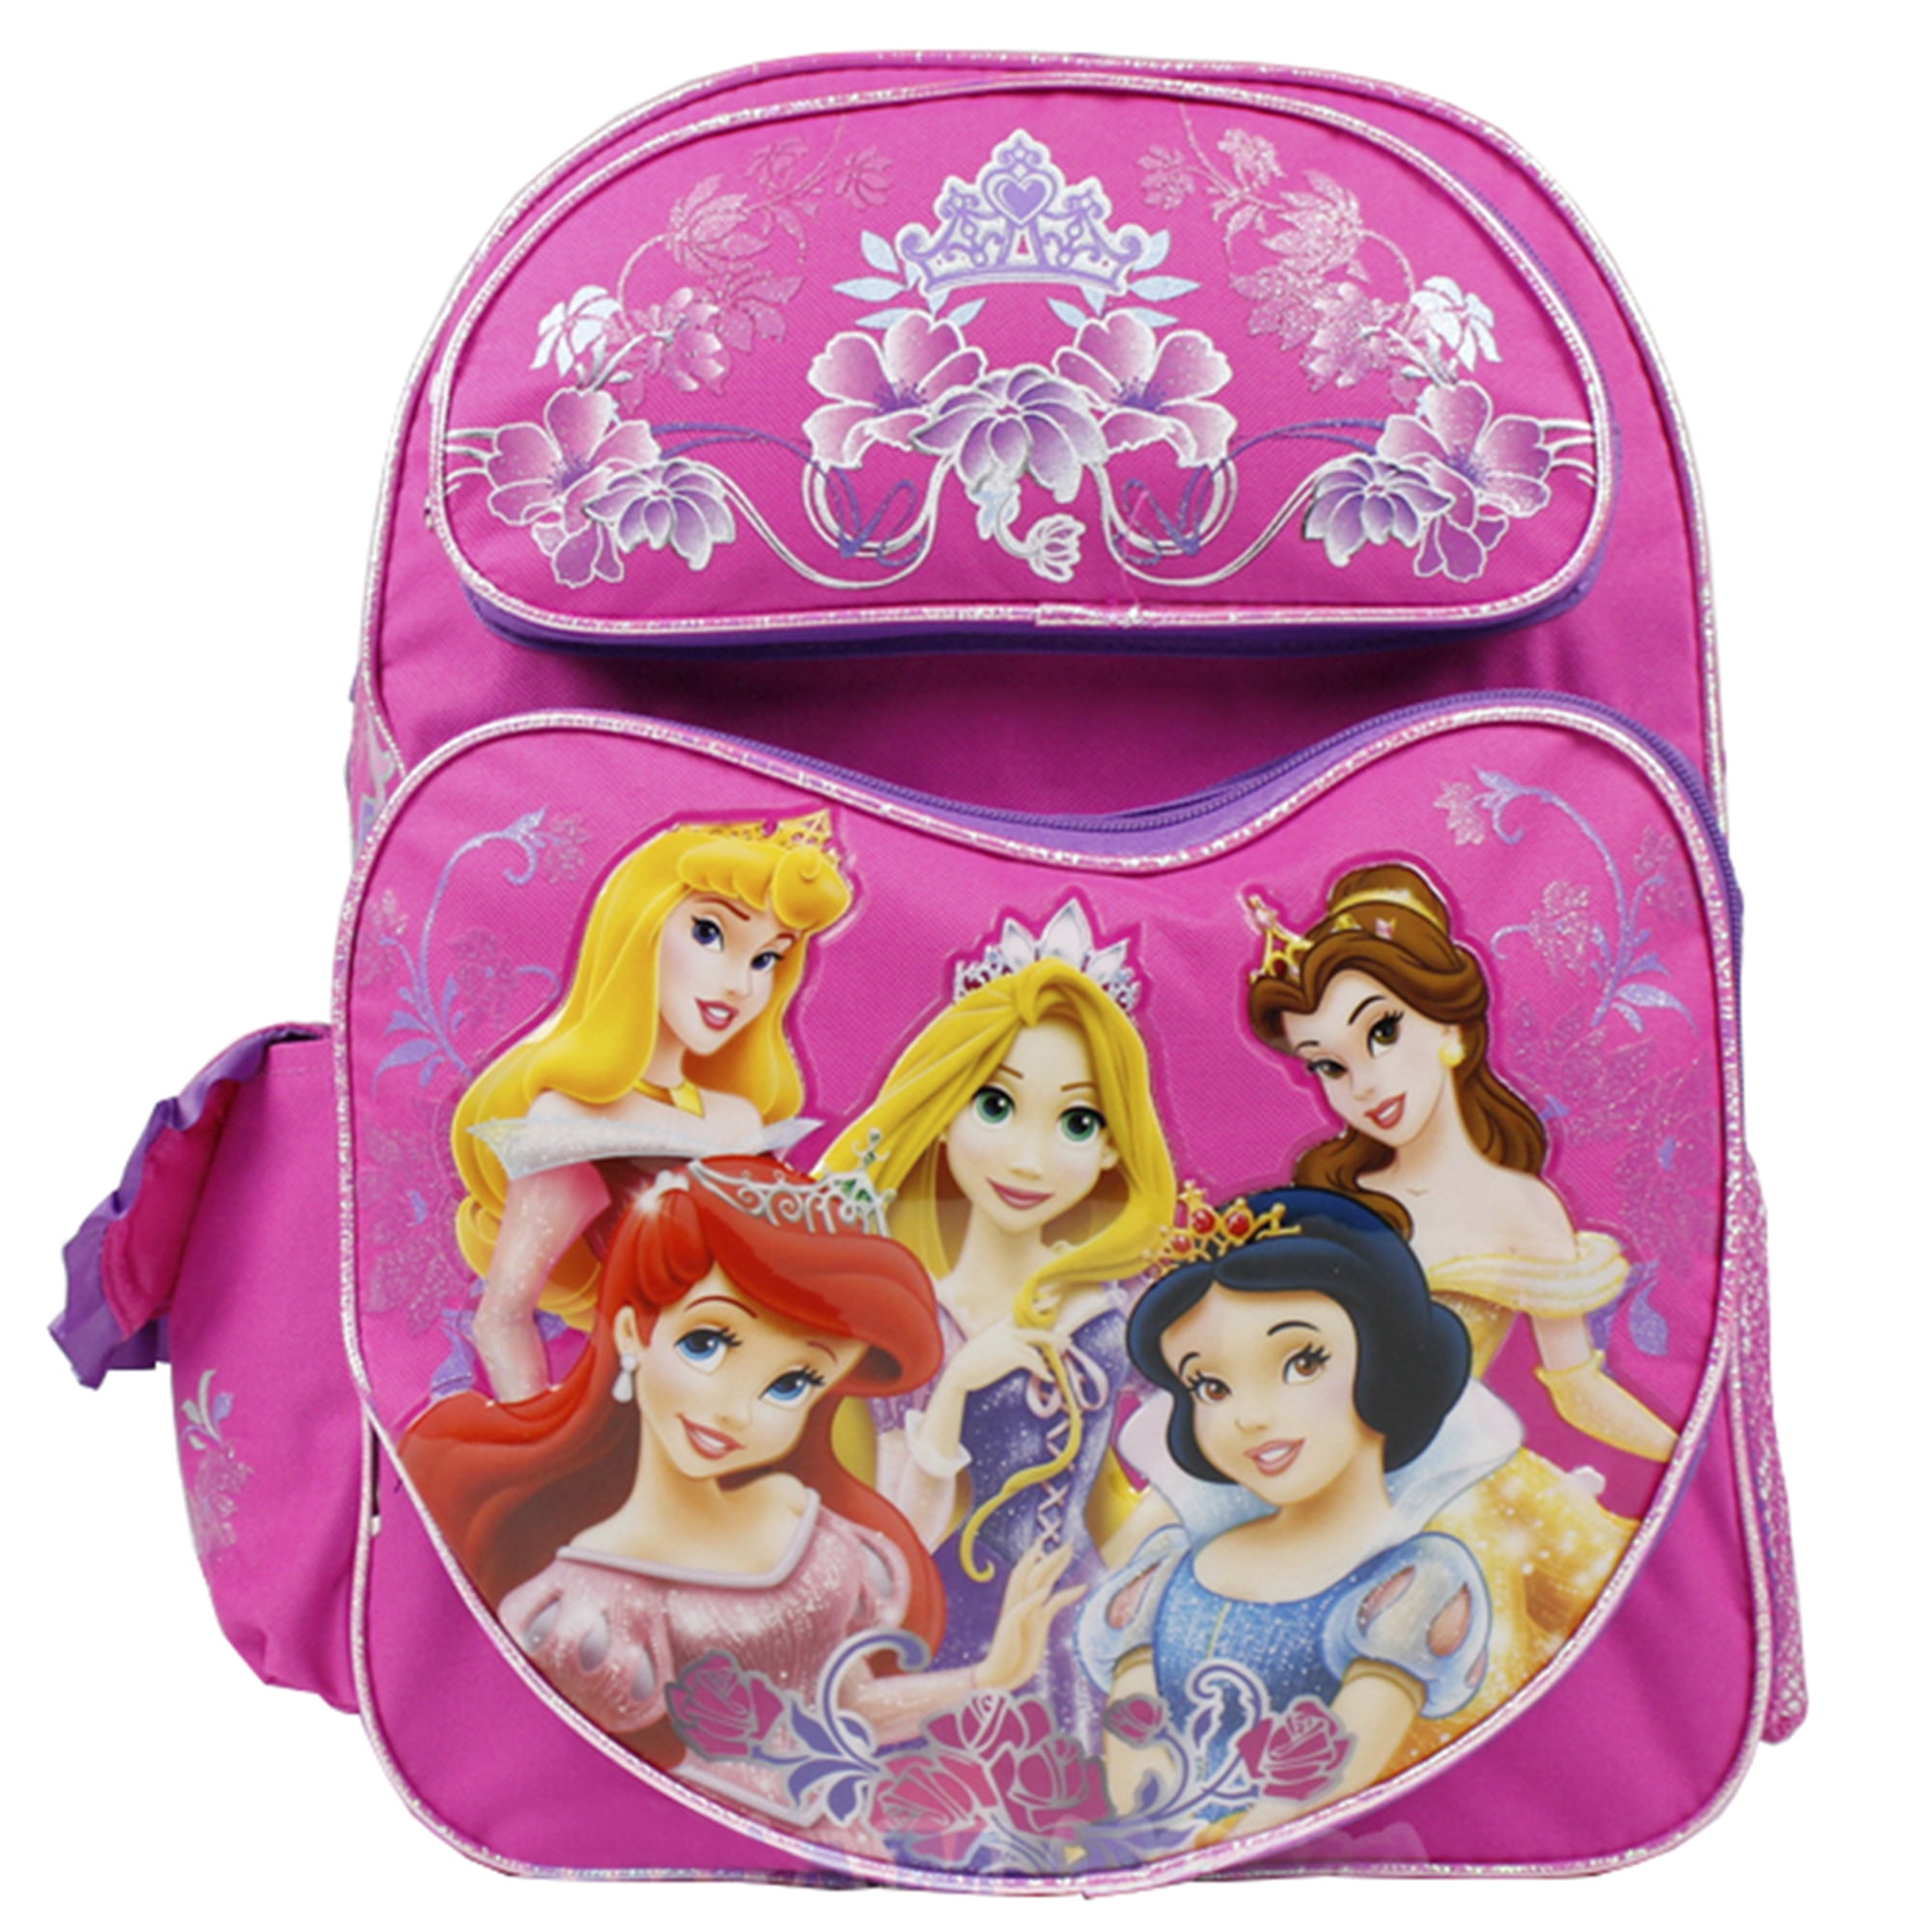 DISNEY PRINCESS Childrens School Bag Bagpack NEW with tags 